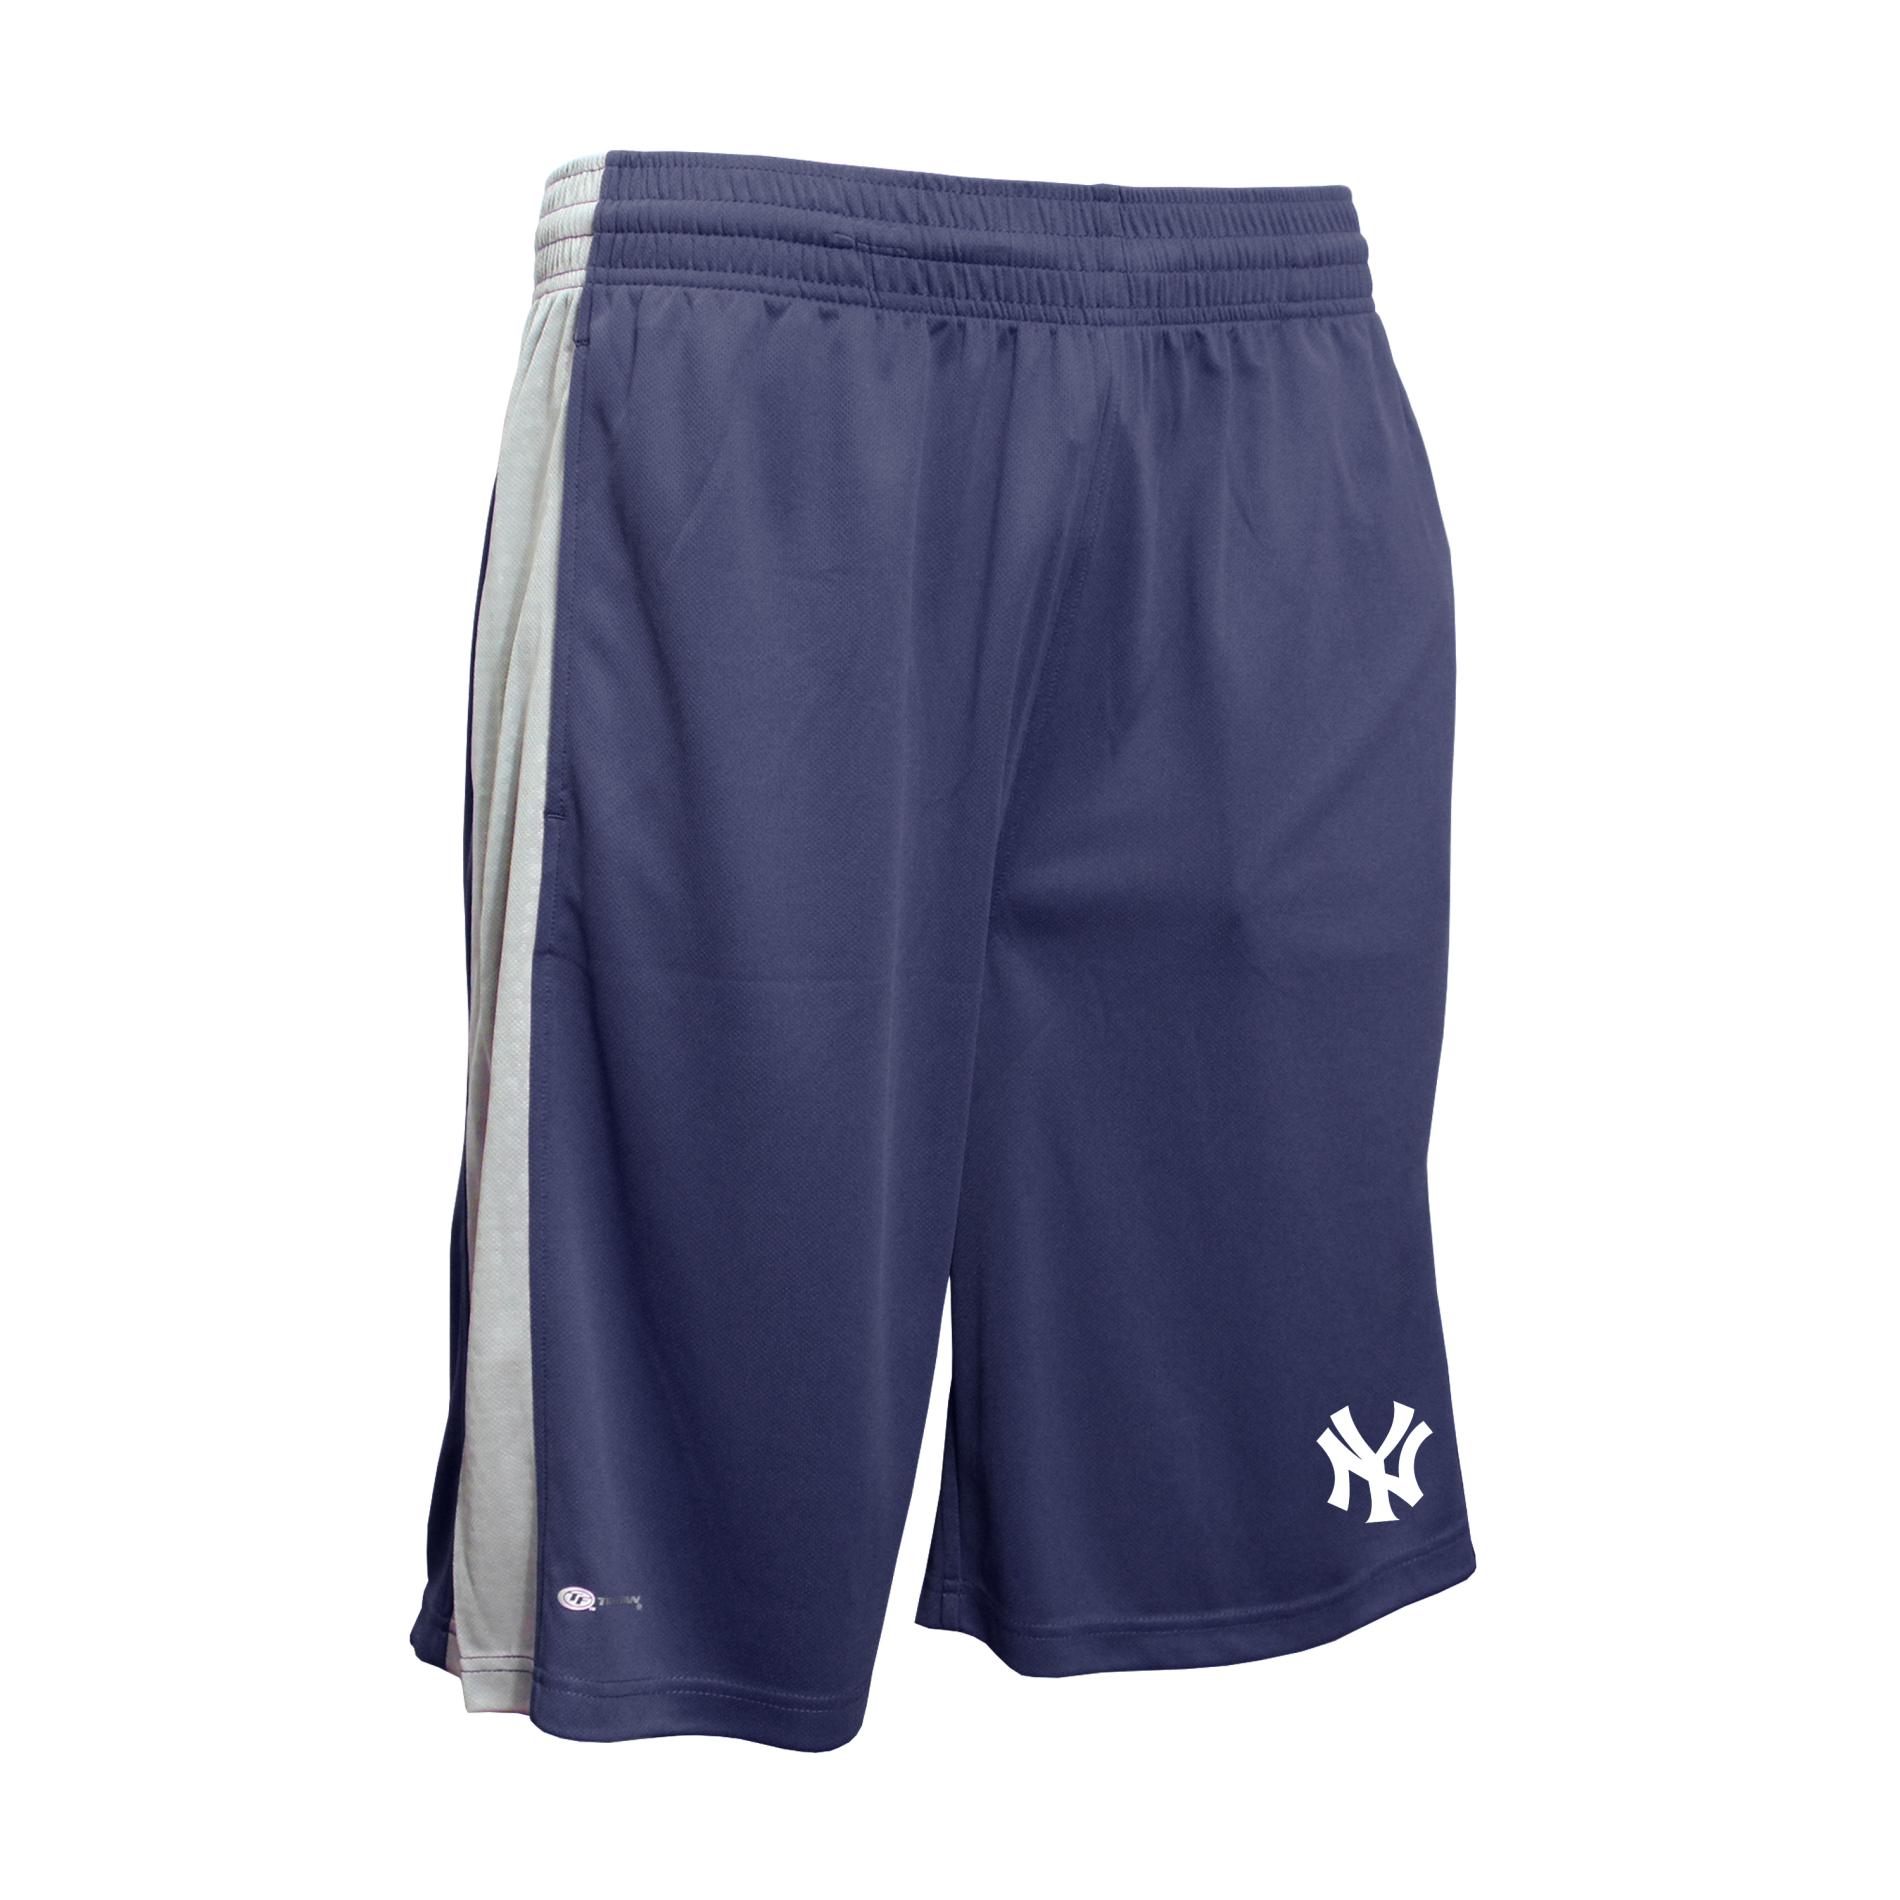 MLB Men's Athletic Shorts - New York Yankees